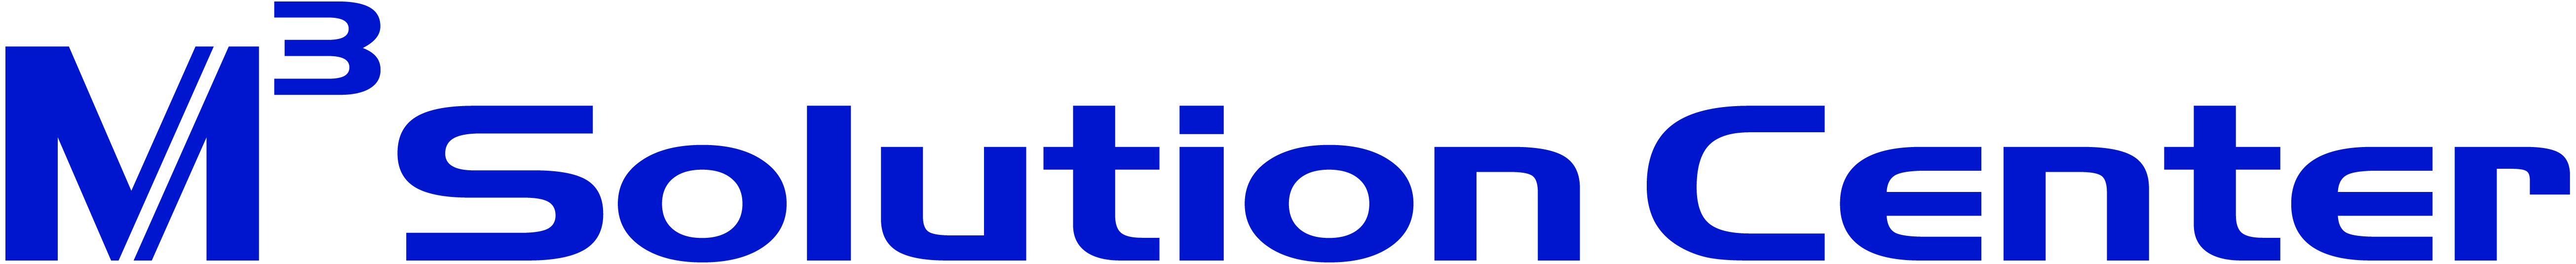 Basic Logo Type A.jpg